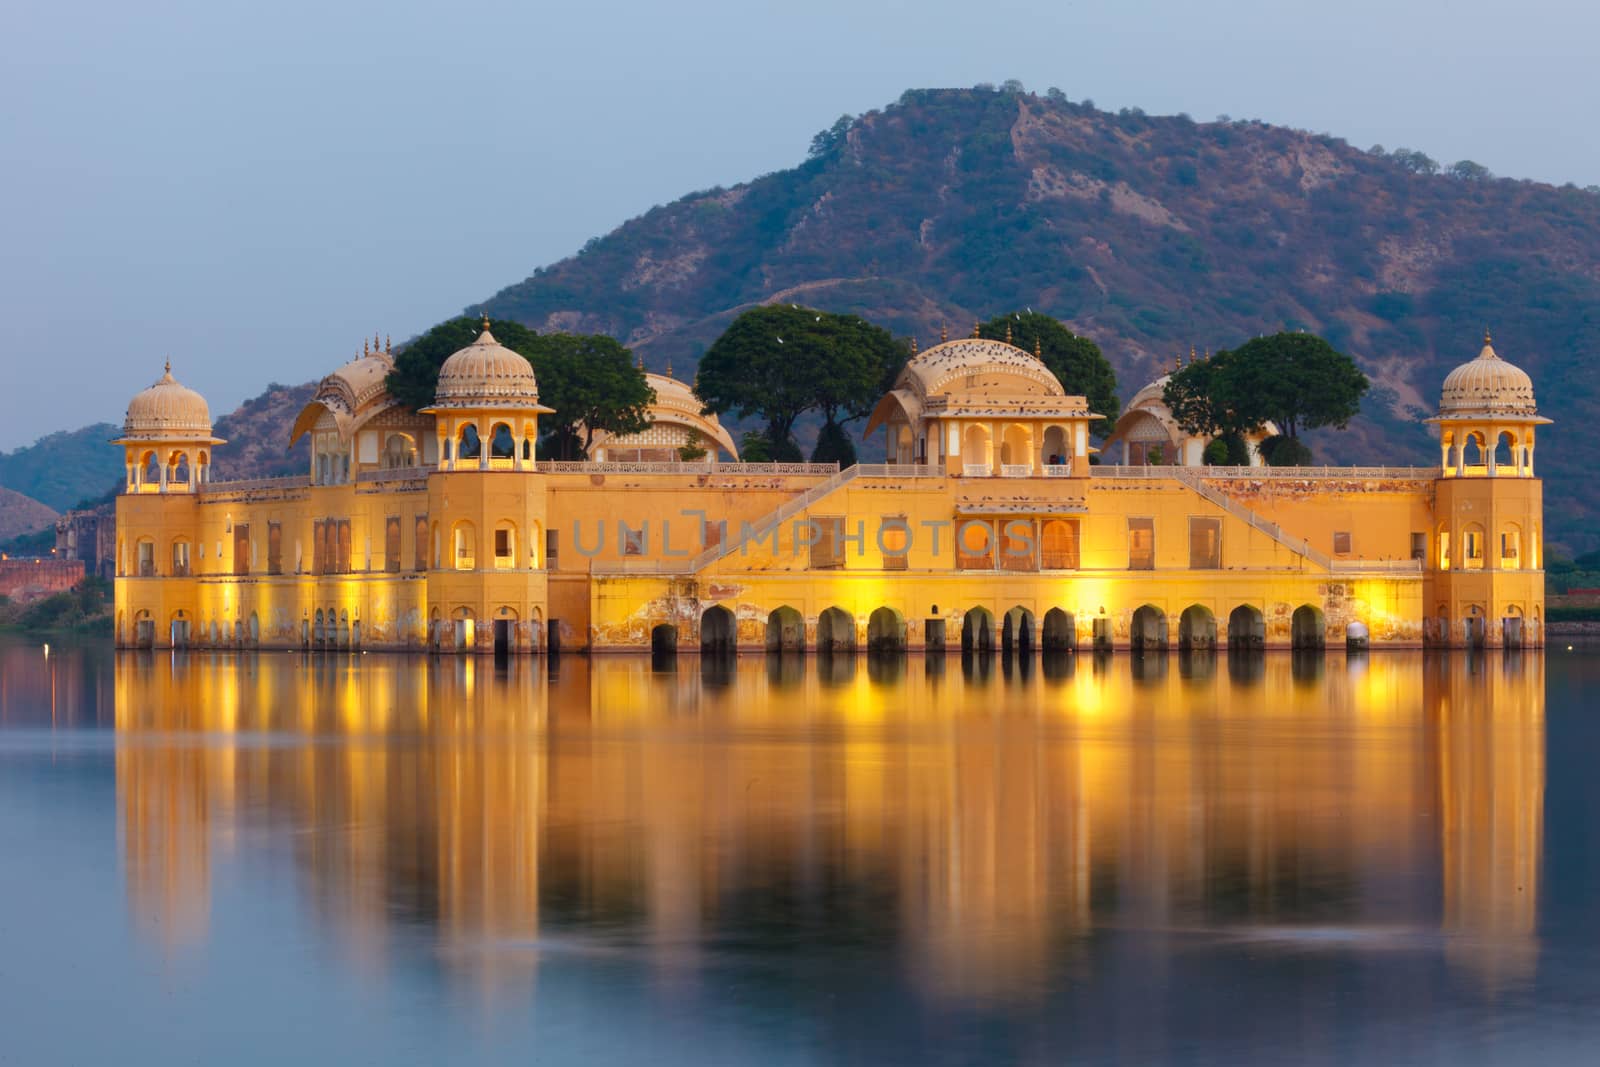 Jal Mahal Palace at twilight, Jaipur, India